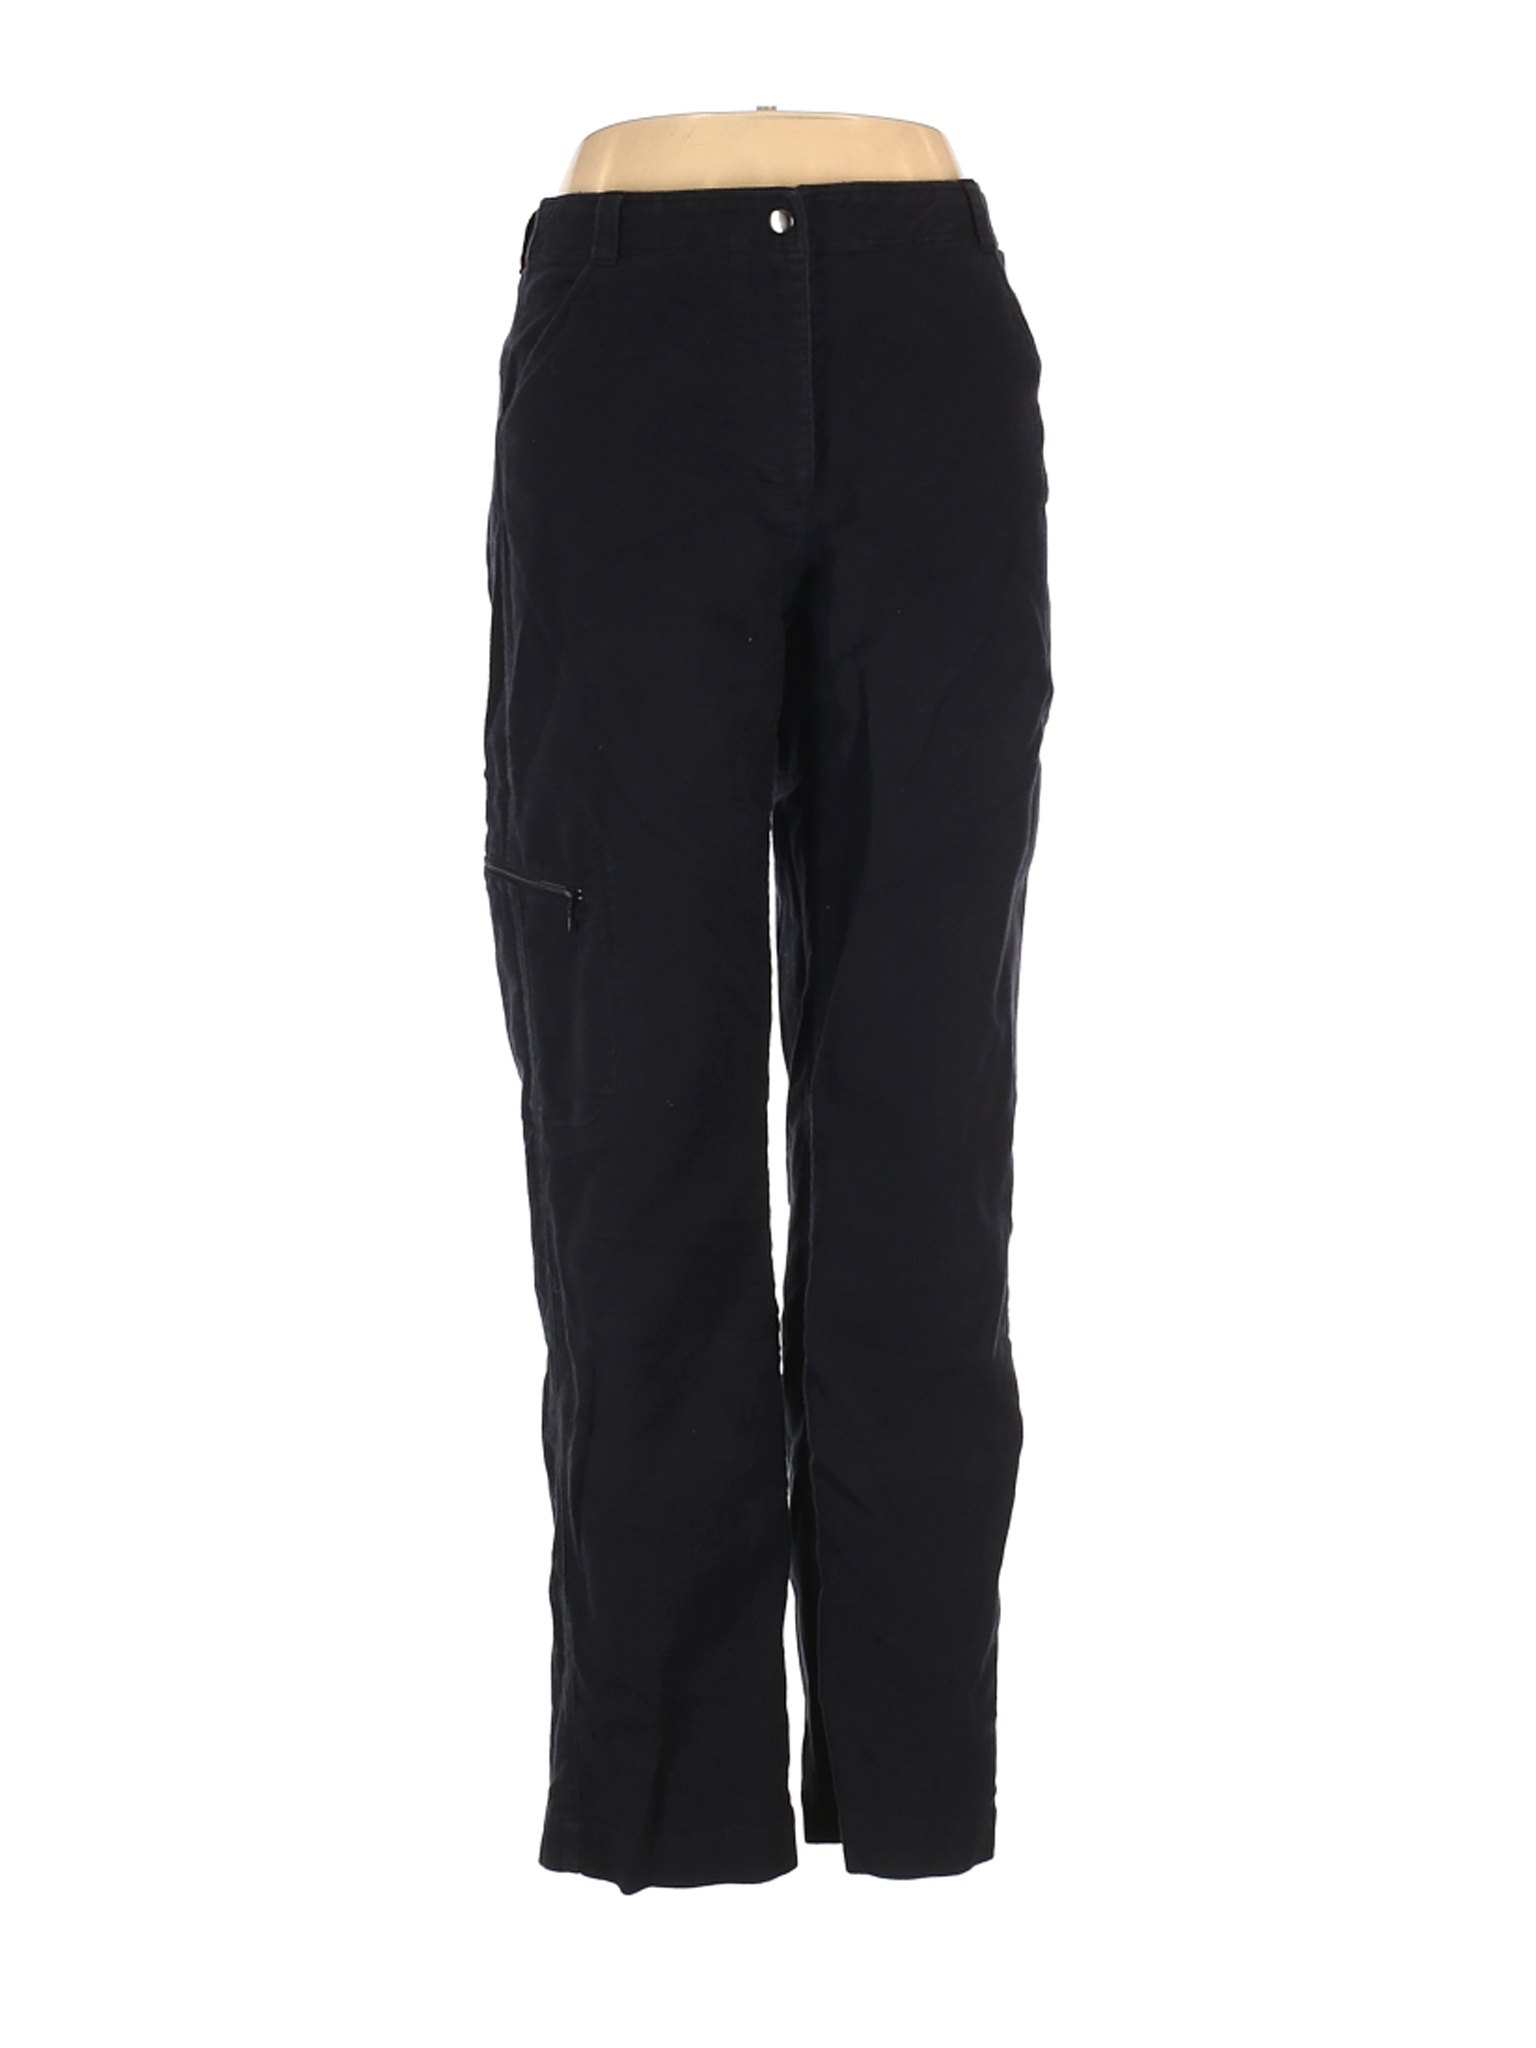 Orvis Women Black Cargo Pants 8 | eBay